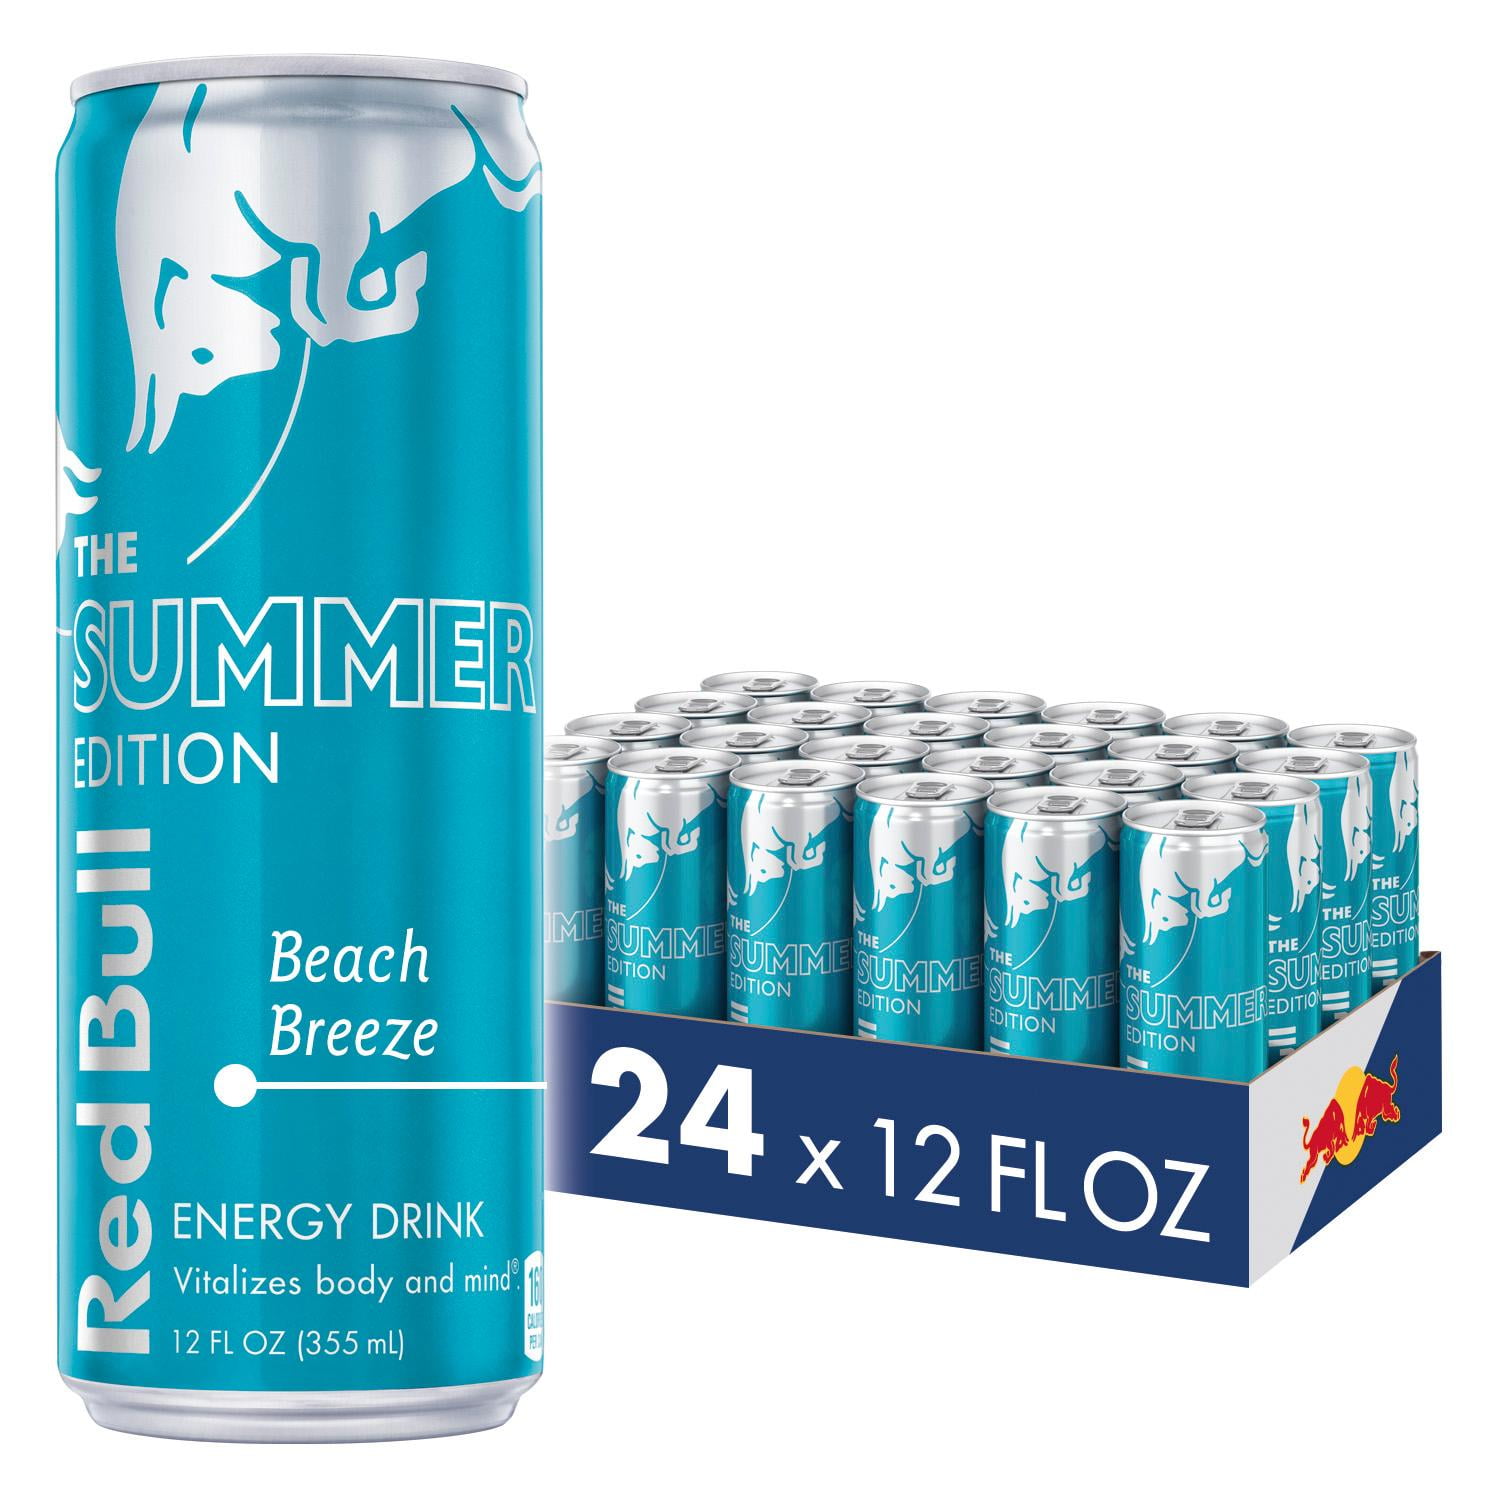 Fisker fjerkræ Højde 24 Cans) Red Bull Energy Drink, Beach Breeze, 24 Pack of 12 fl oz, Summer  Edition - Walmart.com